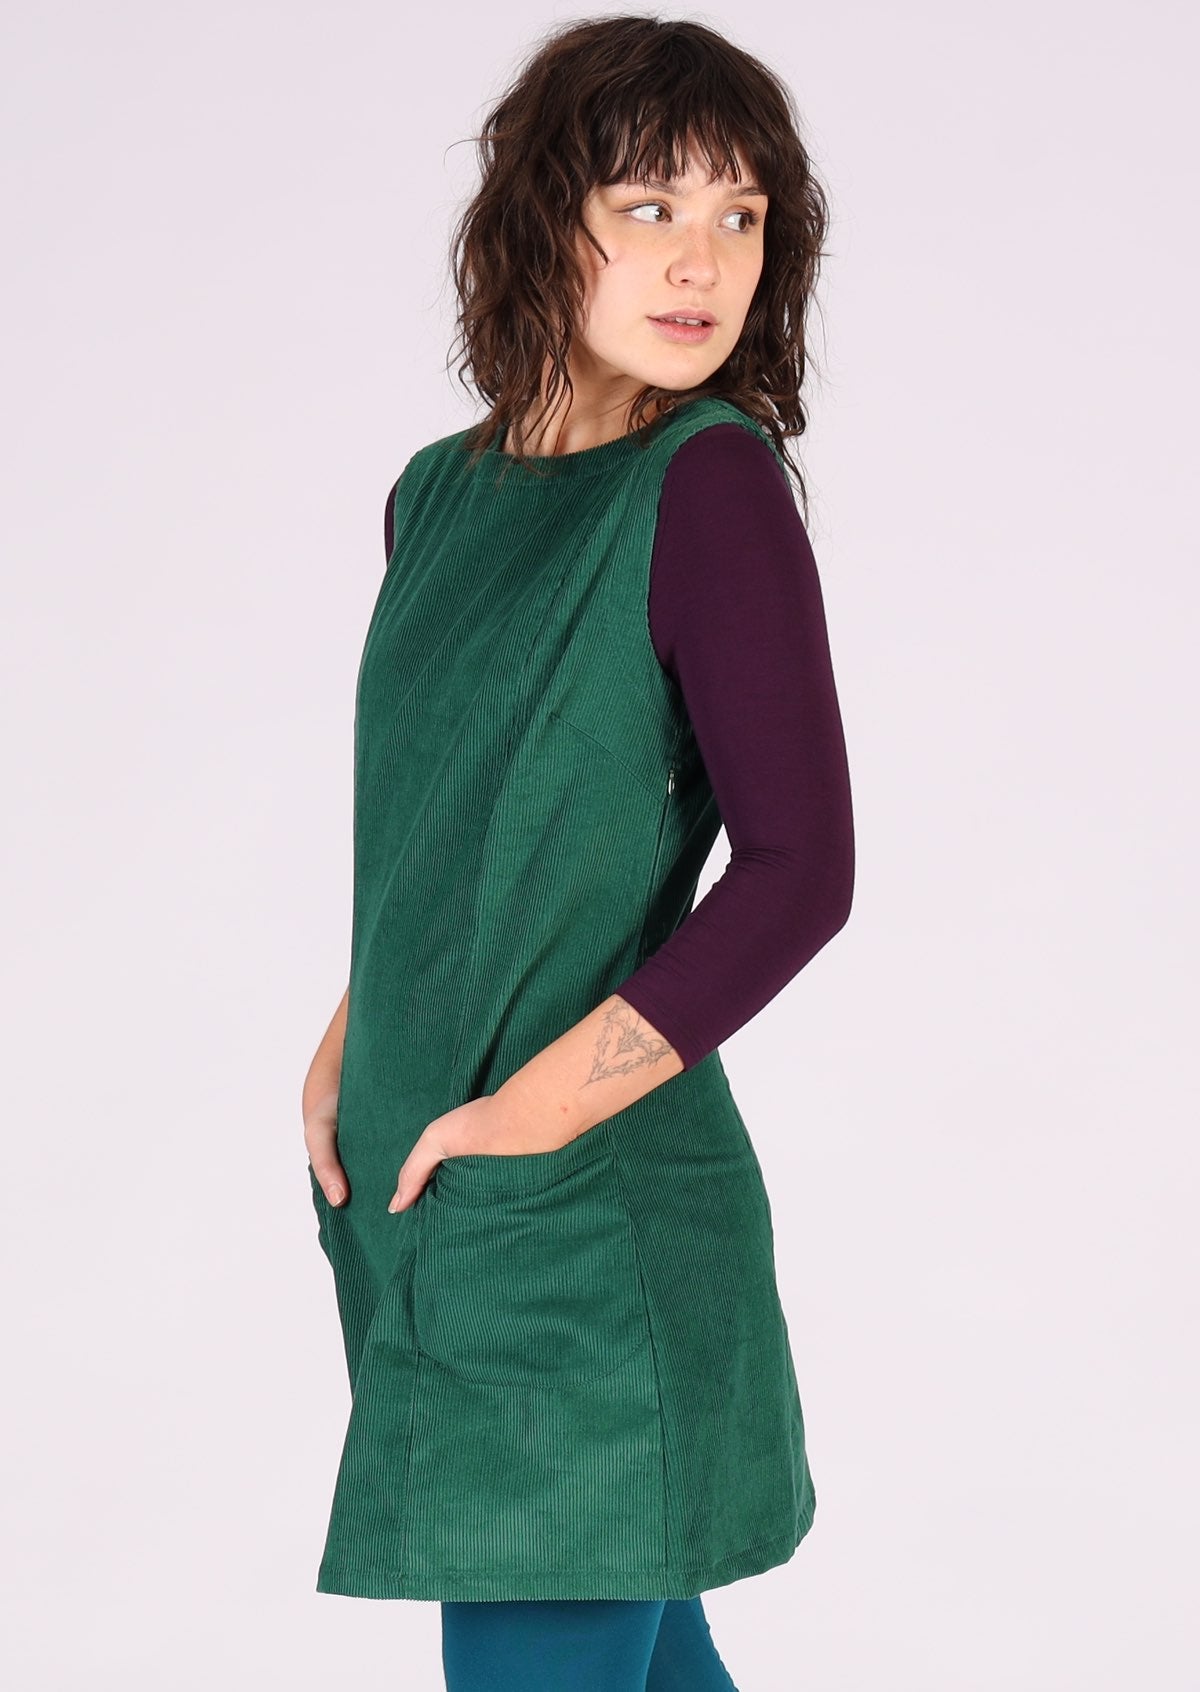 Sleeveless cotton corduroy tunic in rich green colour